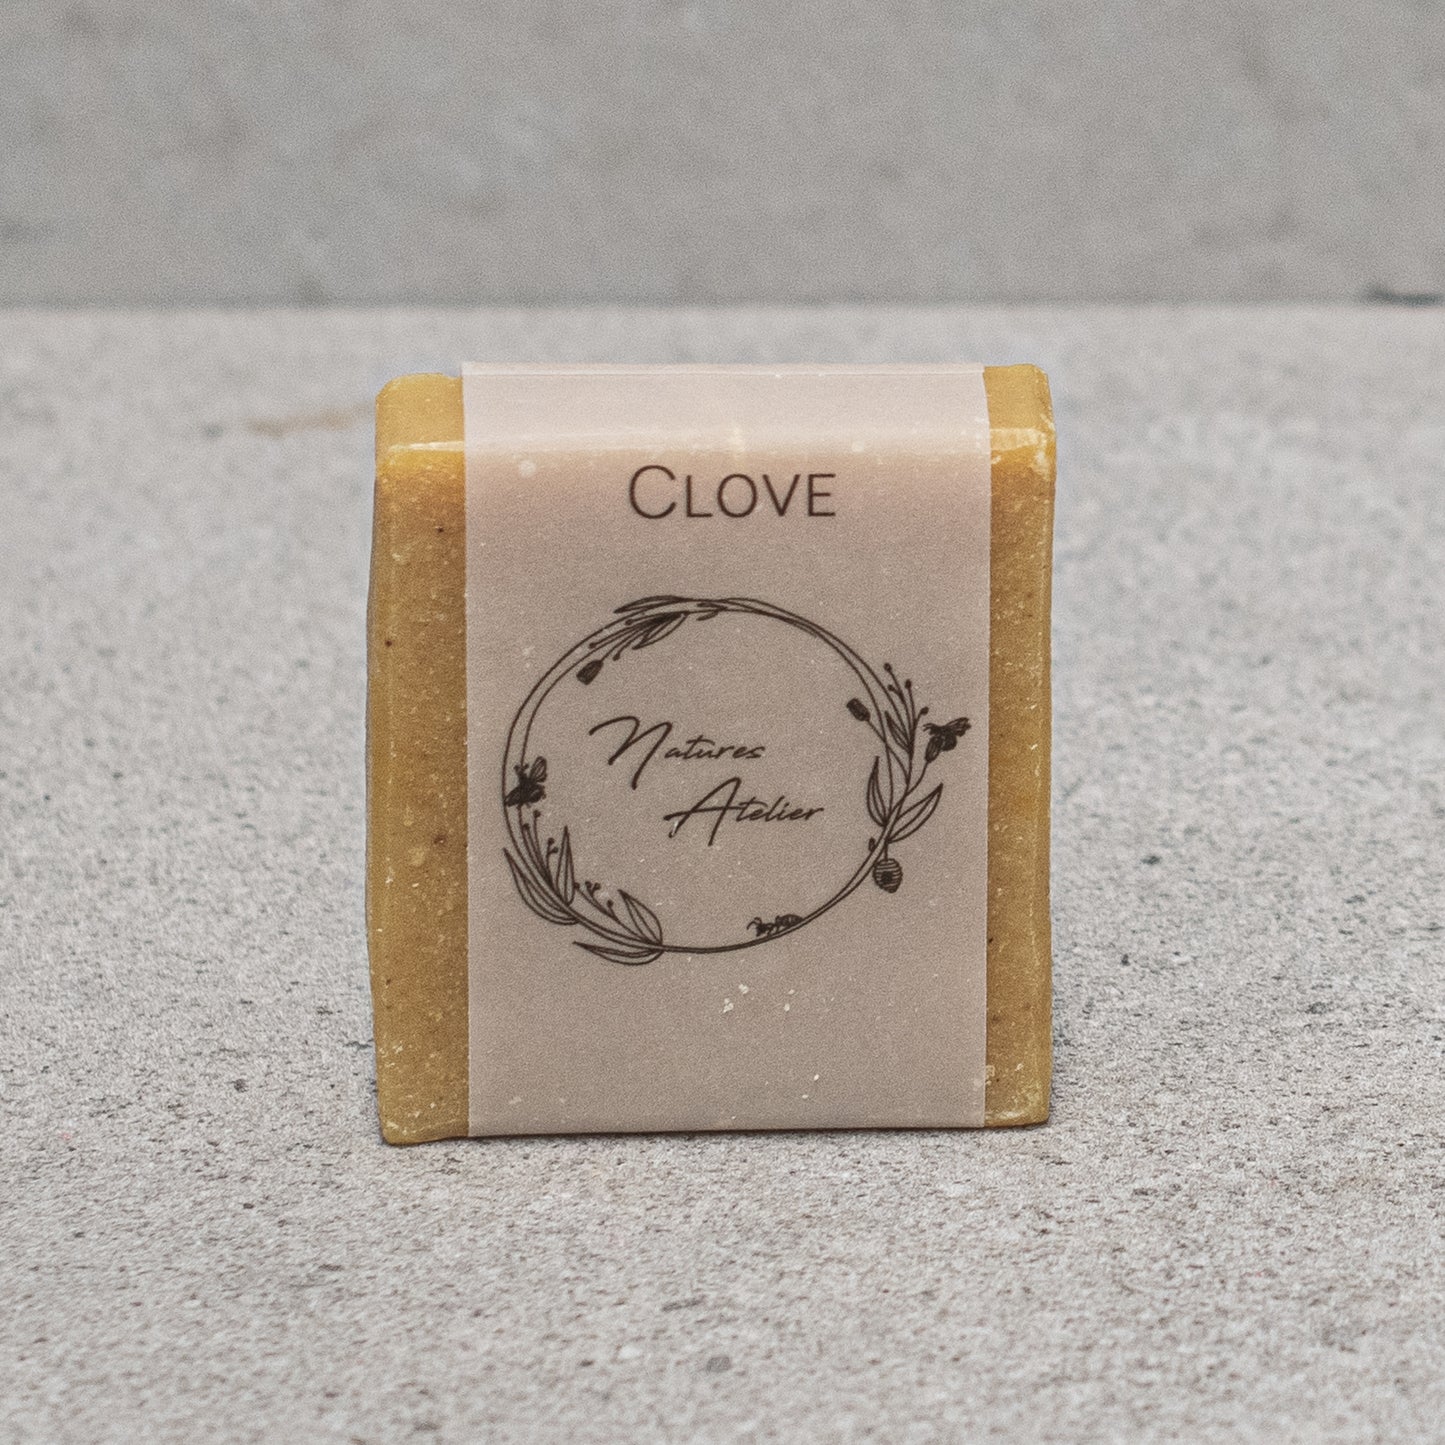 Handmade clove soap